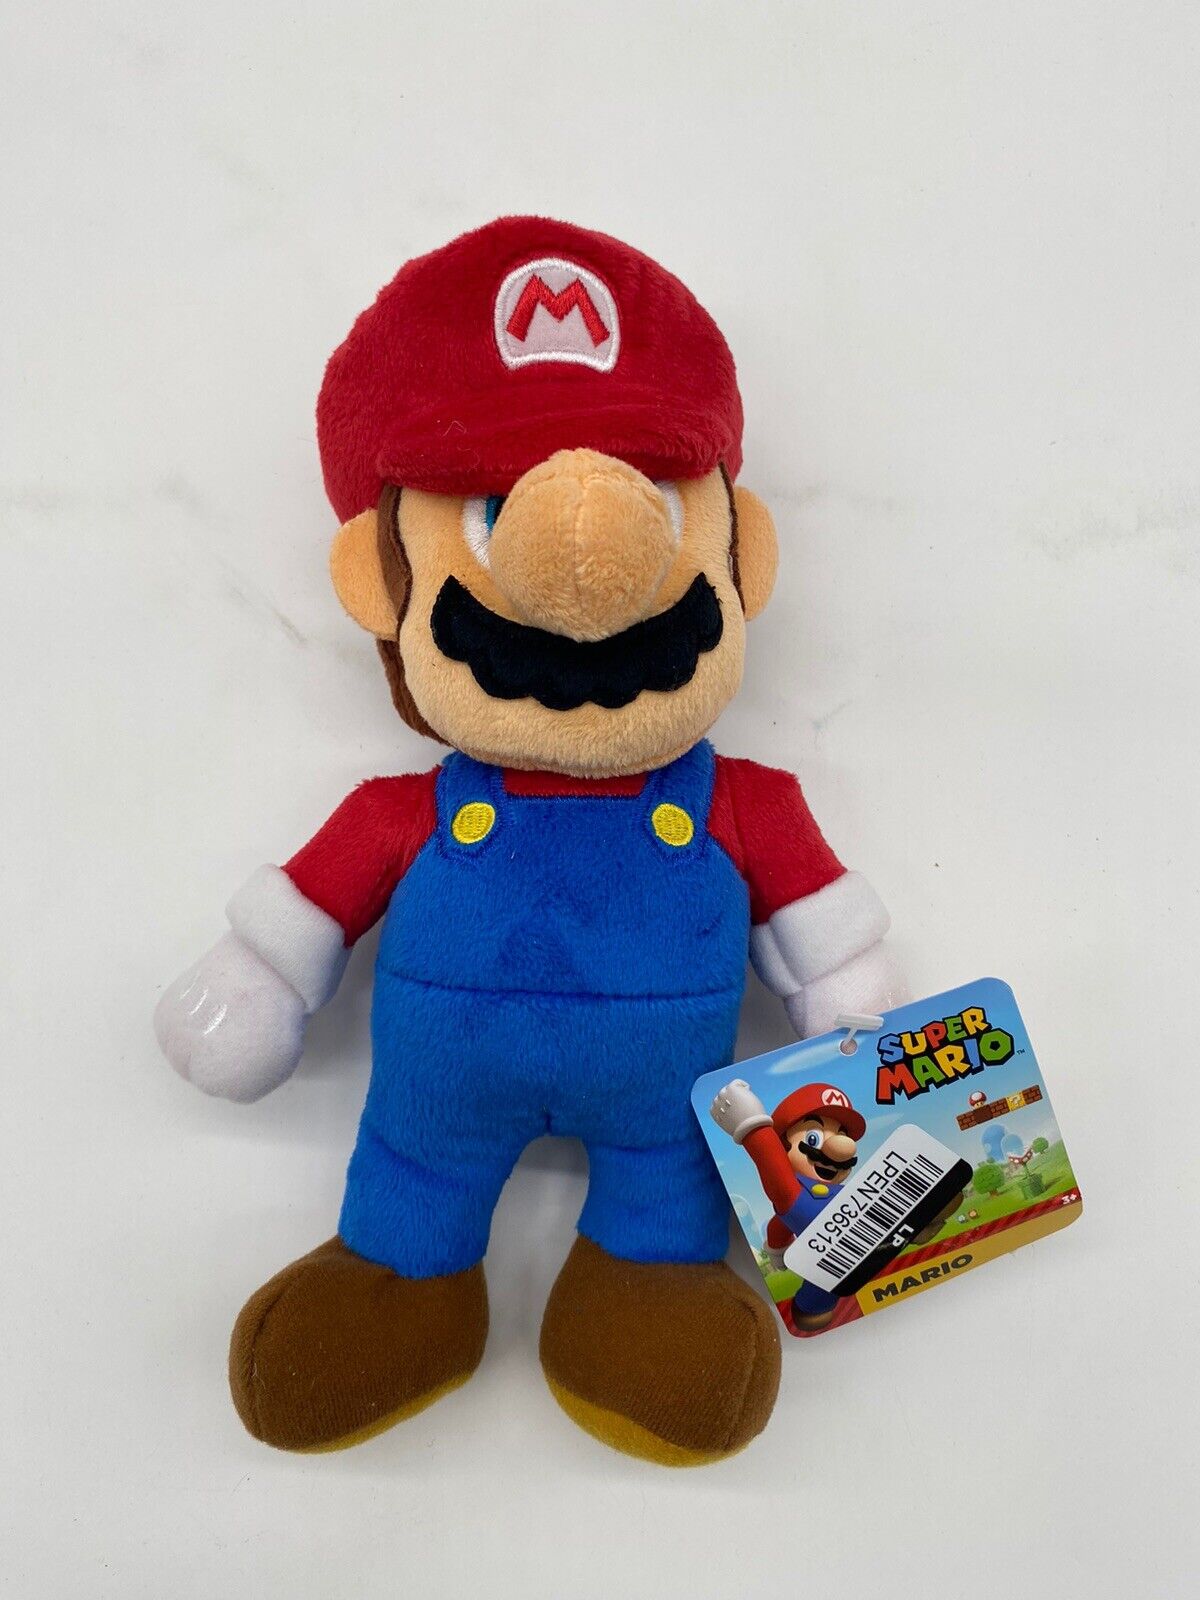 Super Mario Plush World of Nintendo 8" Stuffed Collectible Mario BRAND NEW JAKKS Pacific 40437